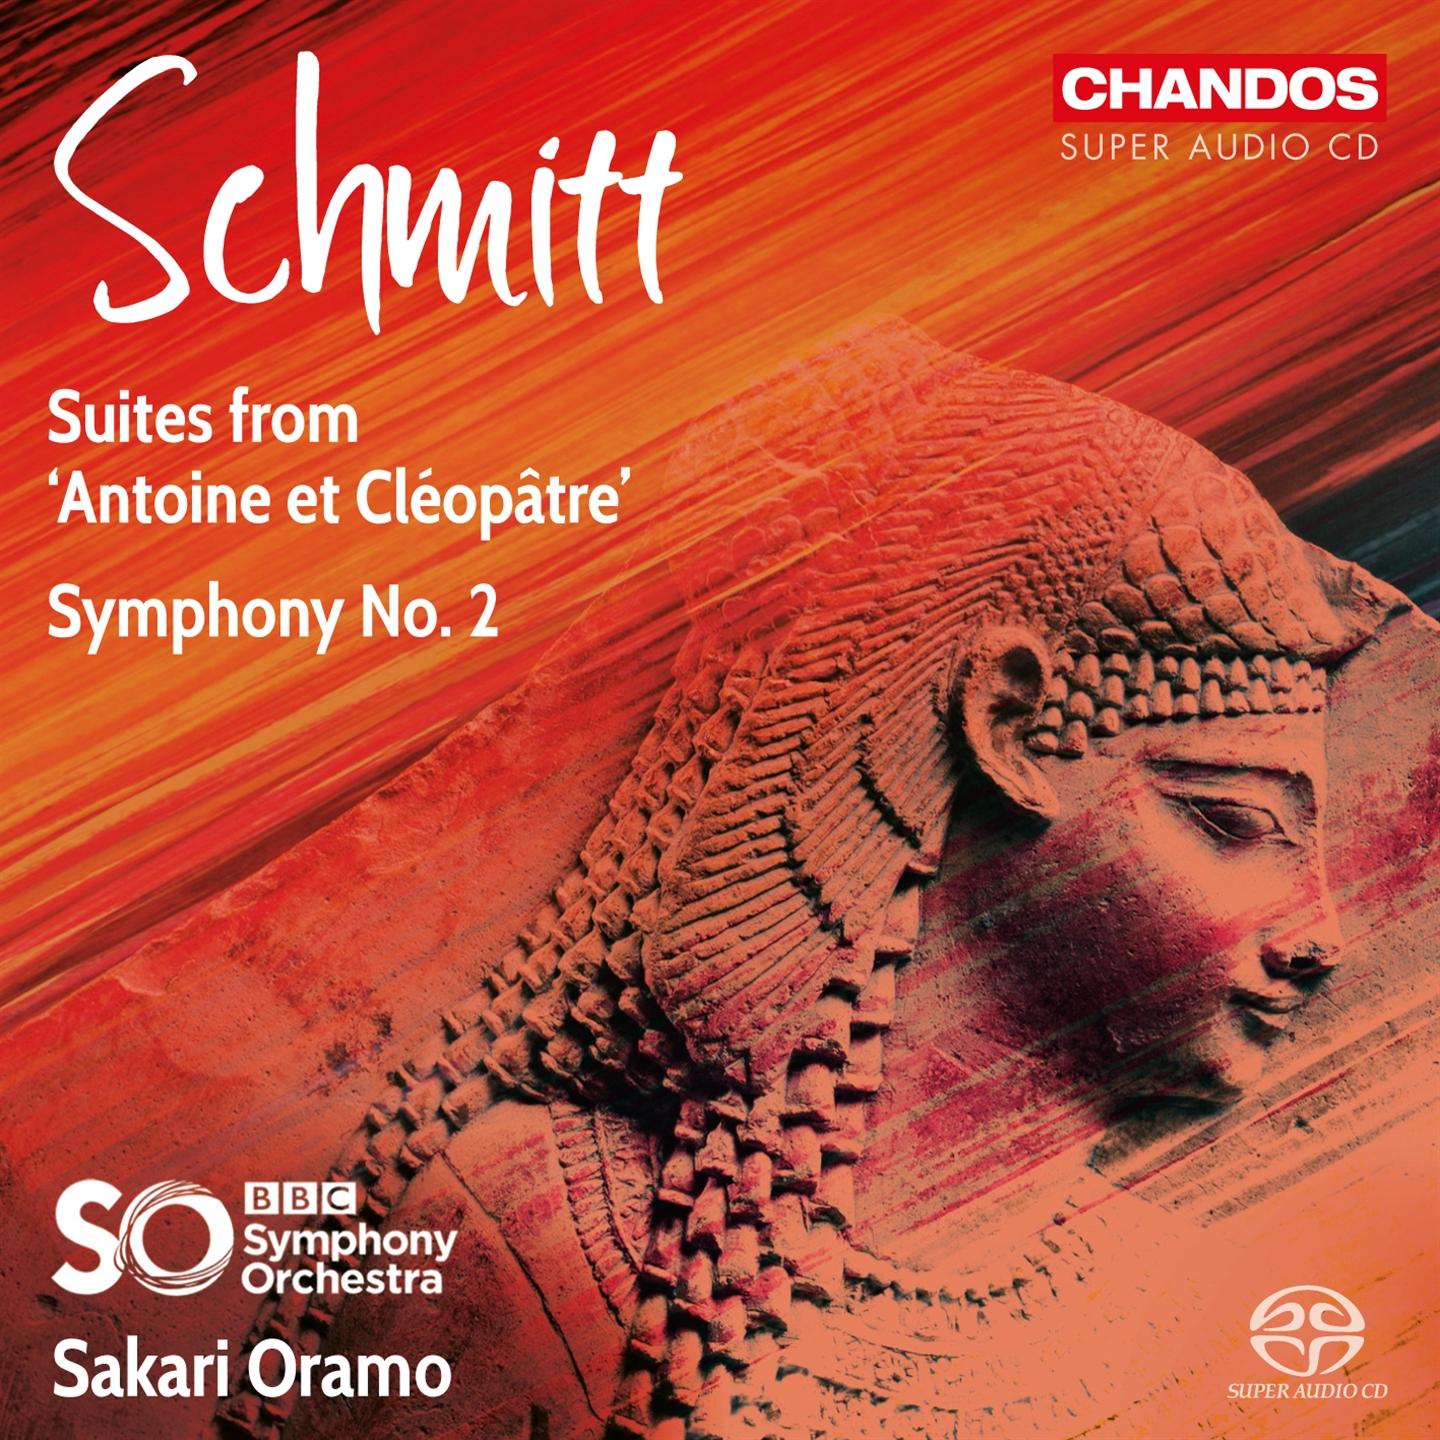 Bbc Symphony Orchestra, Sakari Oramo - Schmitt: Suites From Antoine Et Cleopatr - Foto 1 di 1